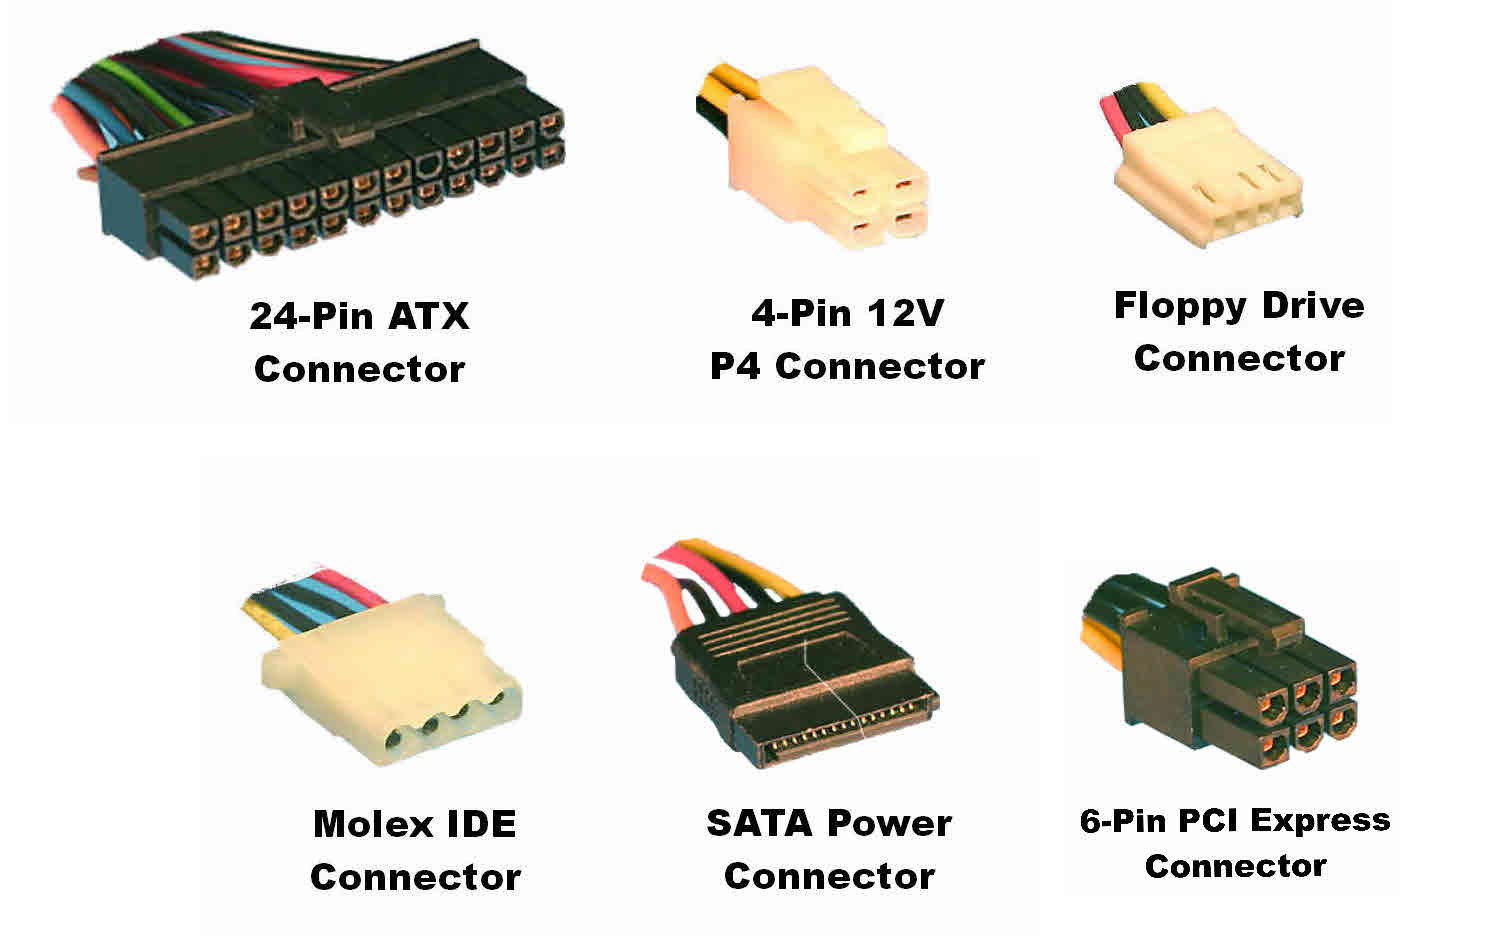 Connector connecting. Molex 12 Pin разъем Panasonic. Разъем 4 Pin floppy. Разъем FDD 6 Pin. FDD разъем питания распиновка.